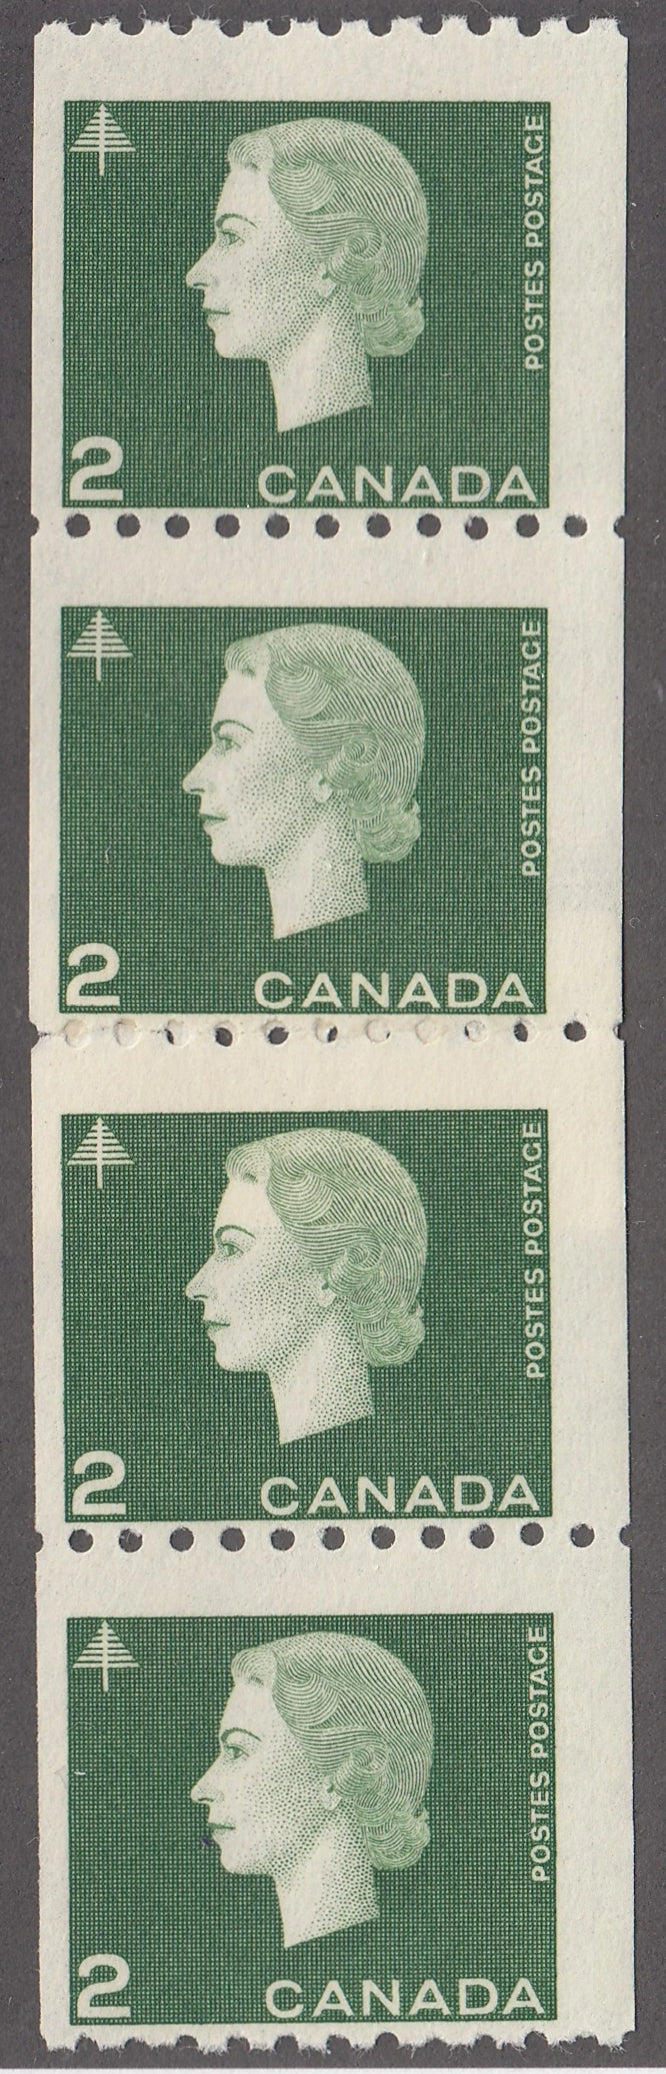 0406CA2102 - Canada #406 Mint Strip - Post Office Repair